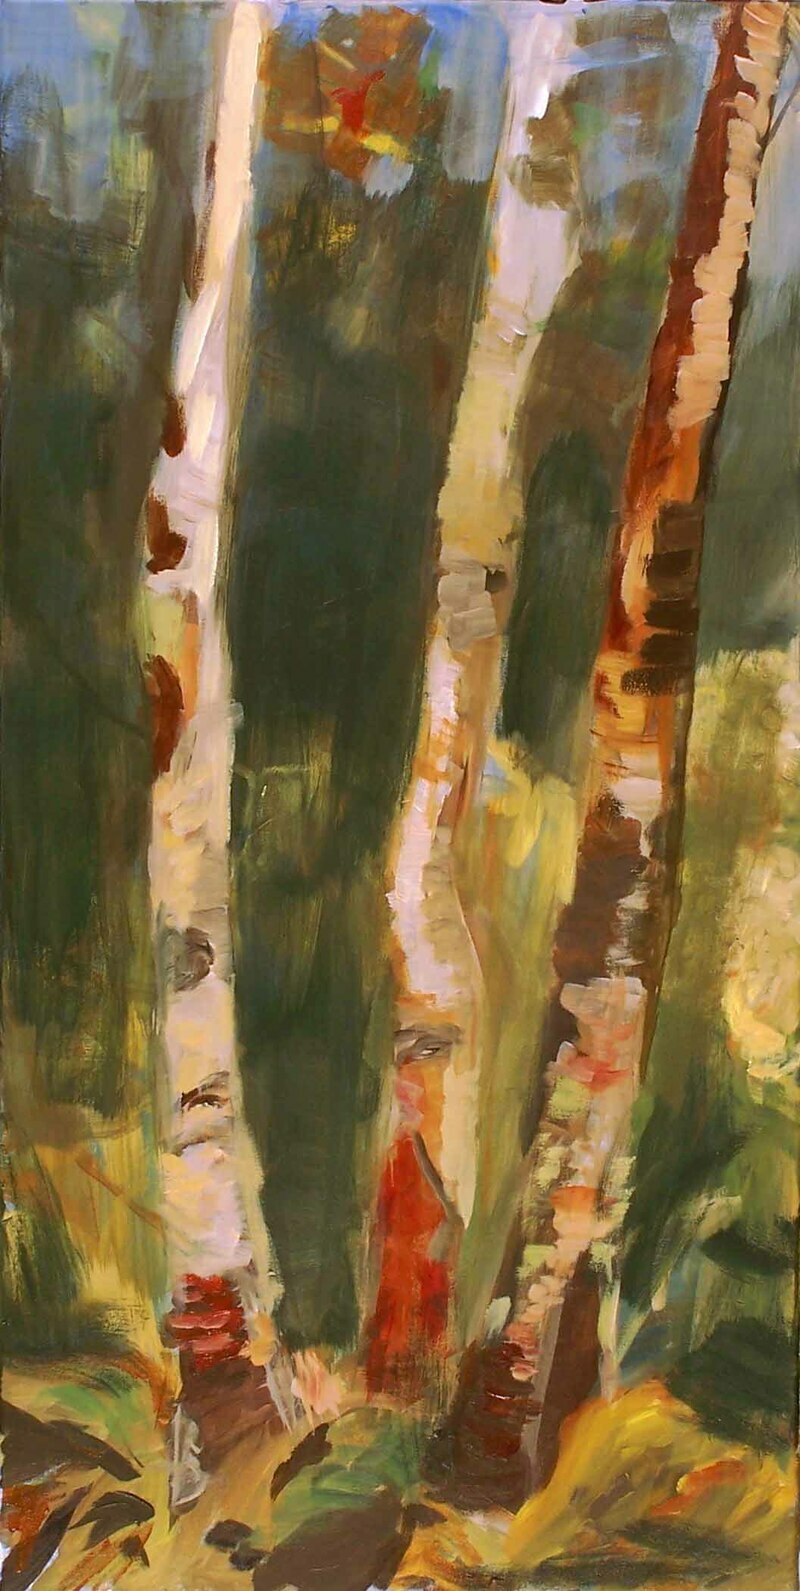 Birch Trio by Rebecca Dufton, 15 x 30 inches, acrylic on canvas